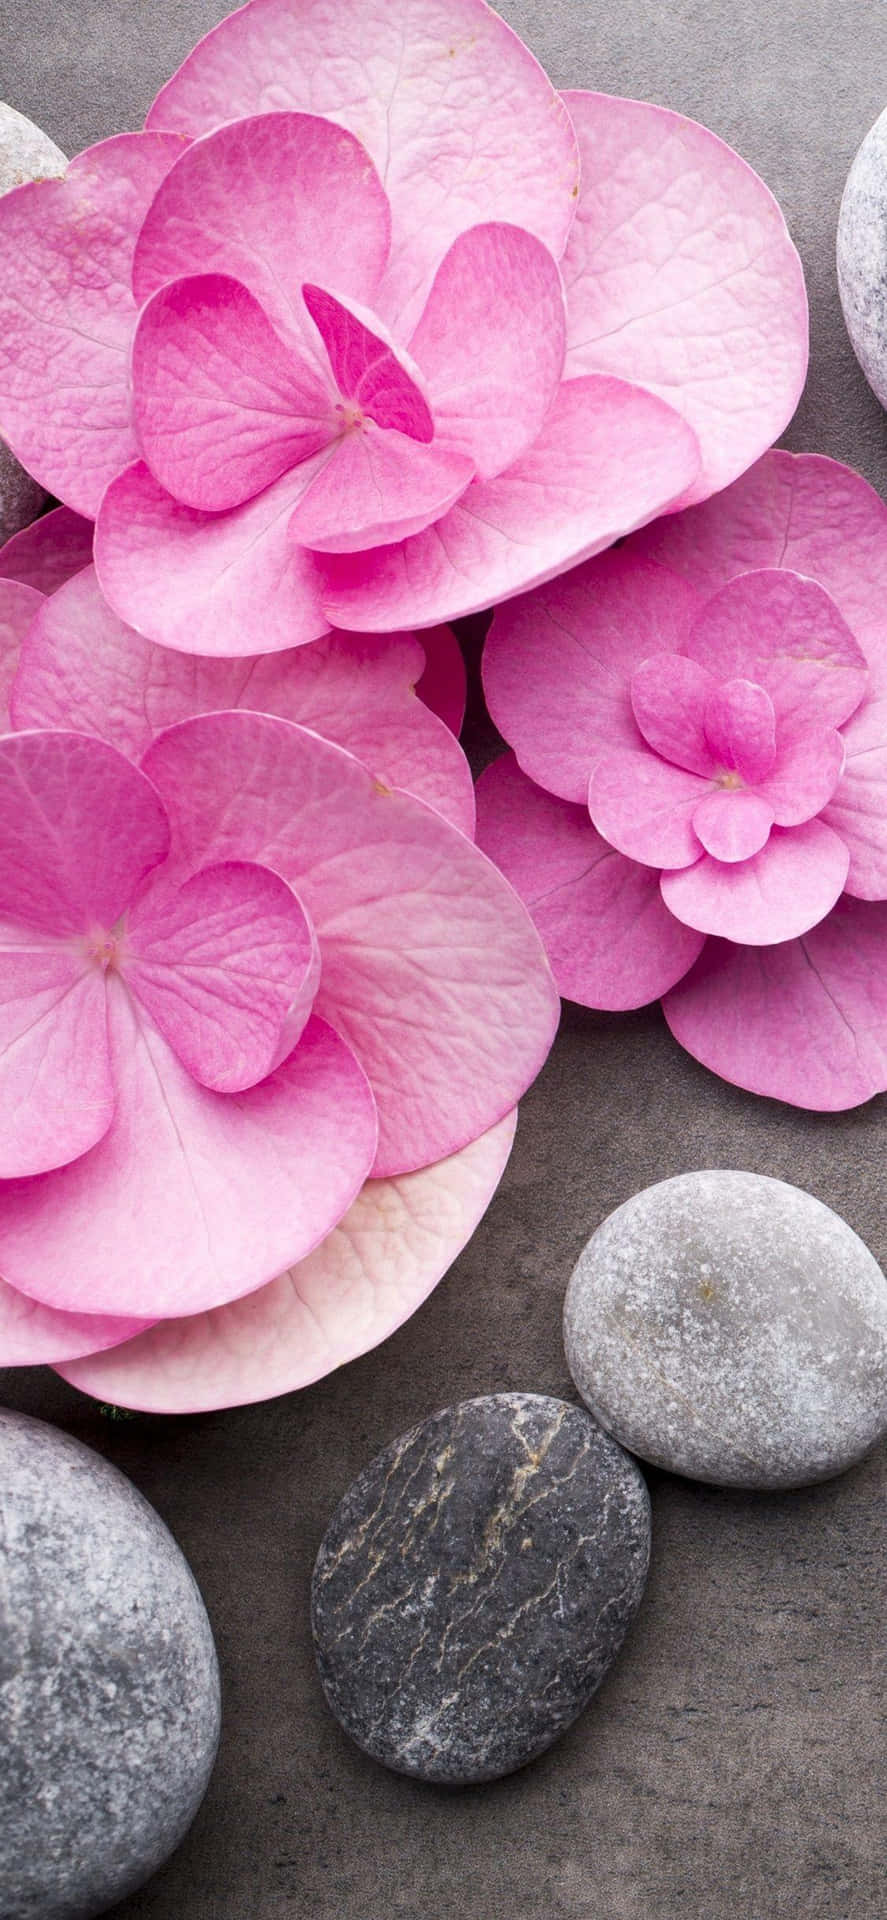 Pink Hydrangea Pebbles Spa Setting Wallpaper